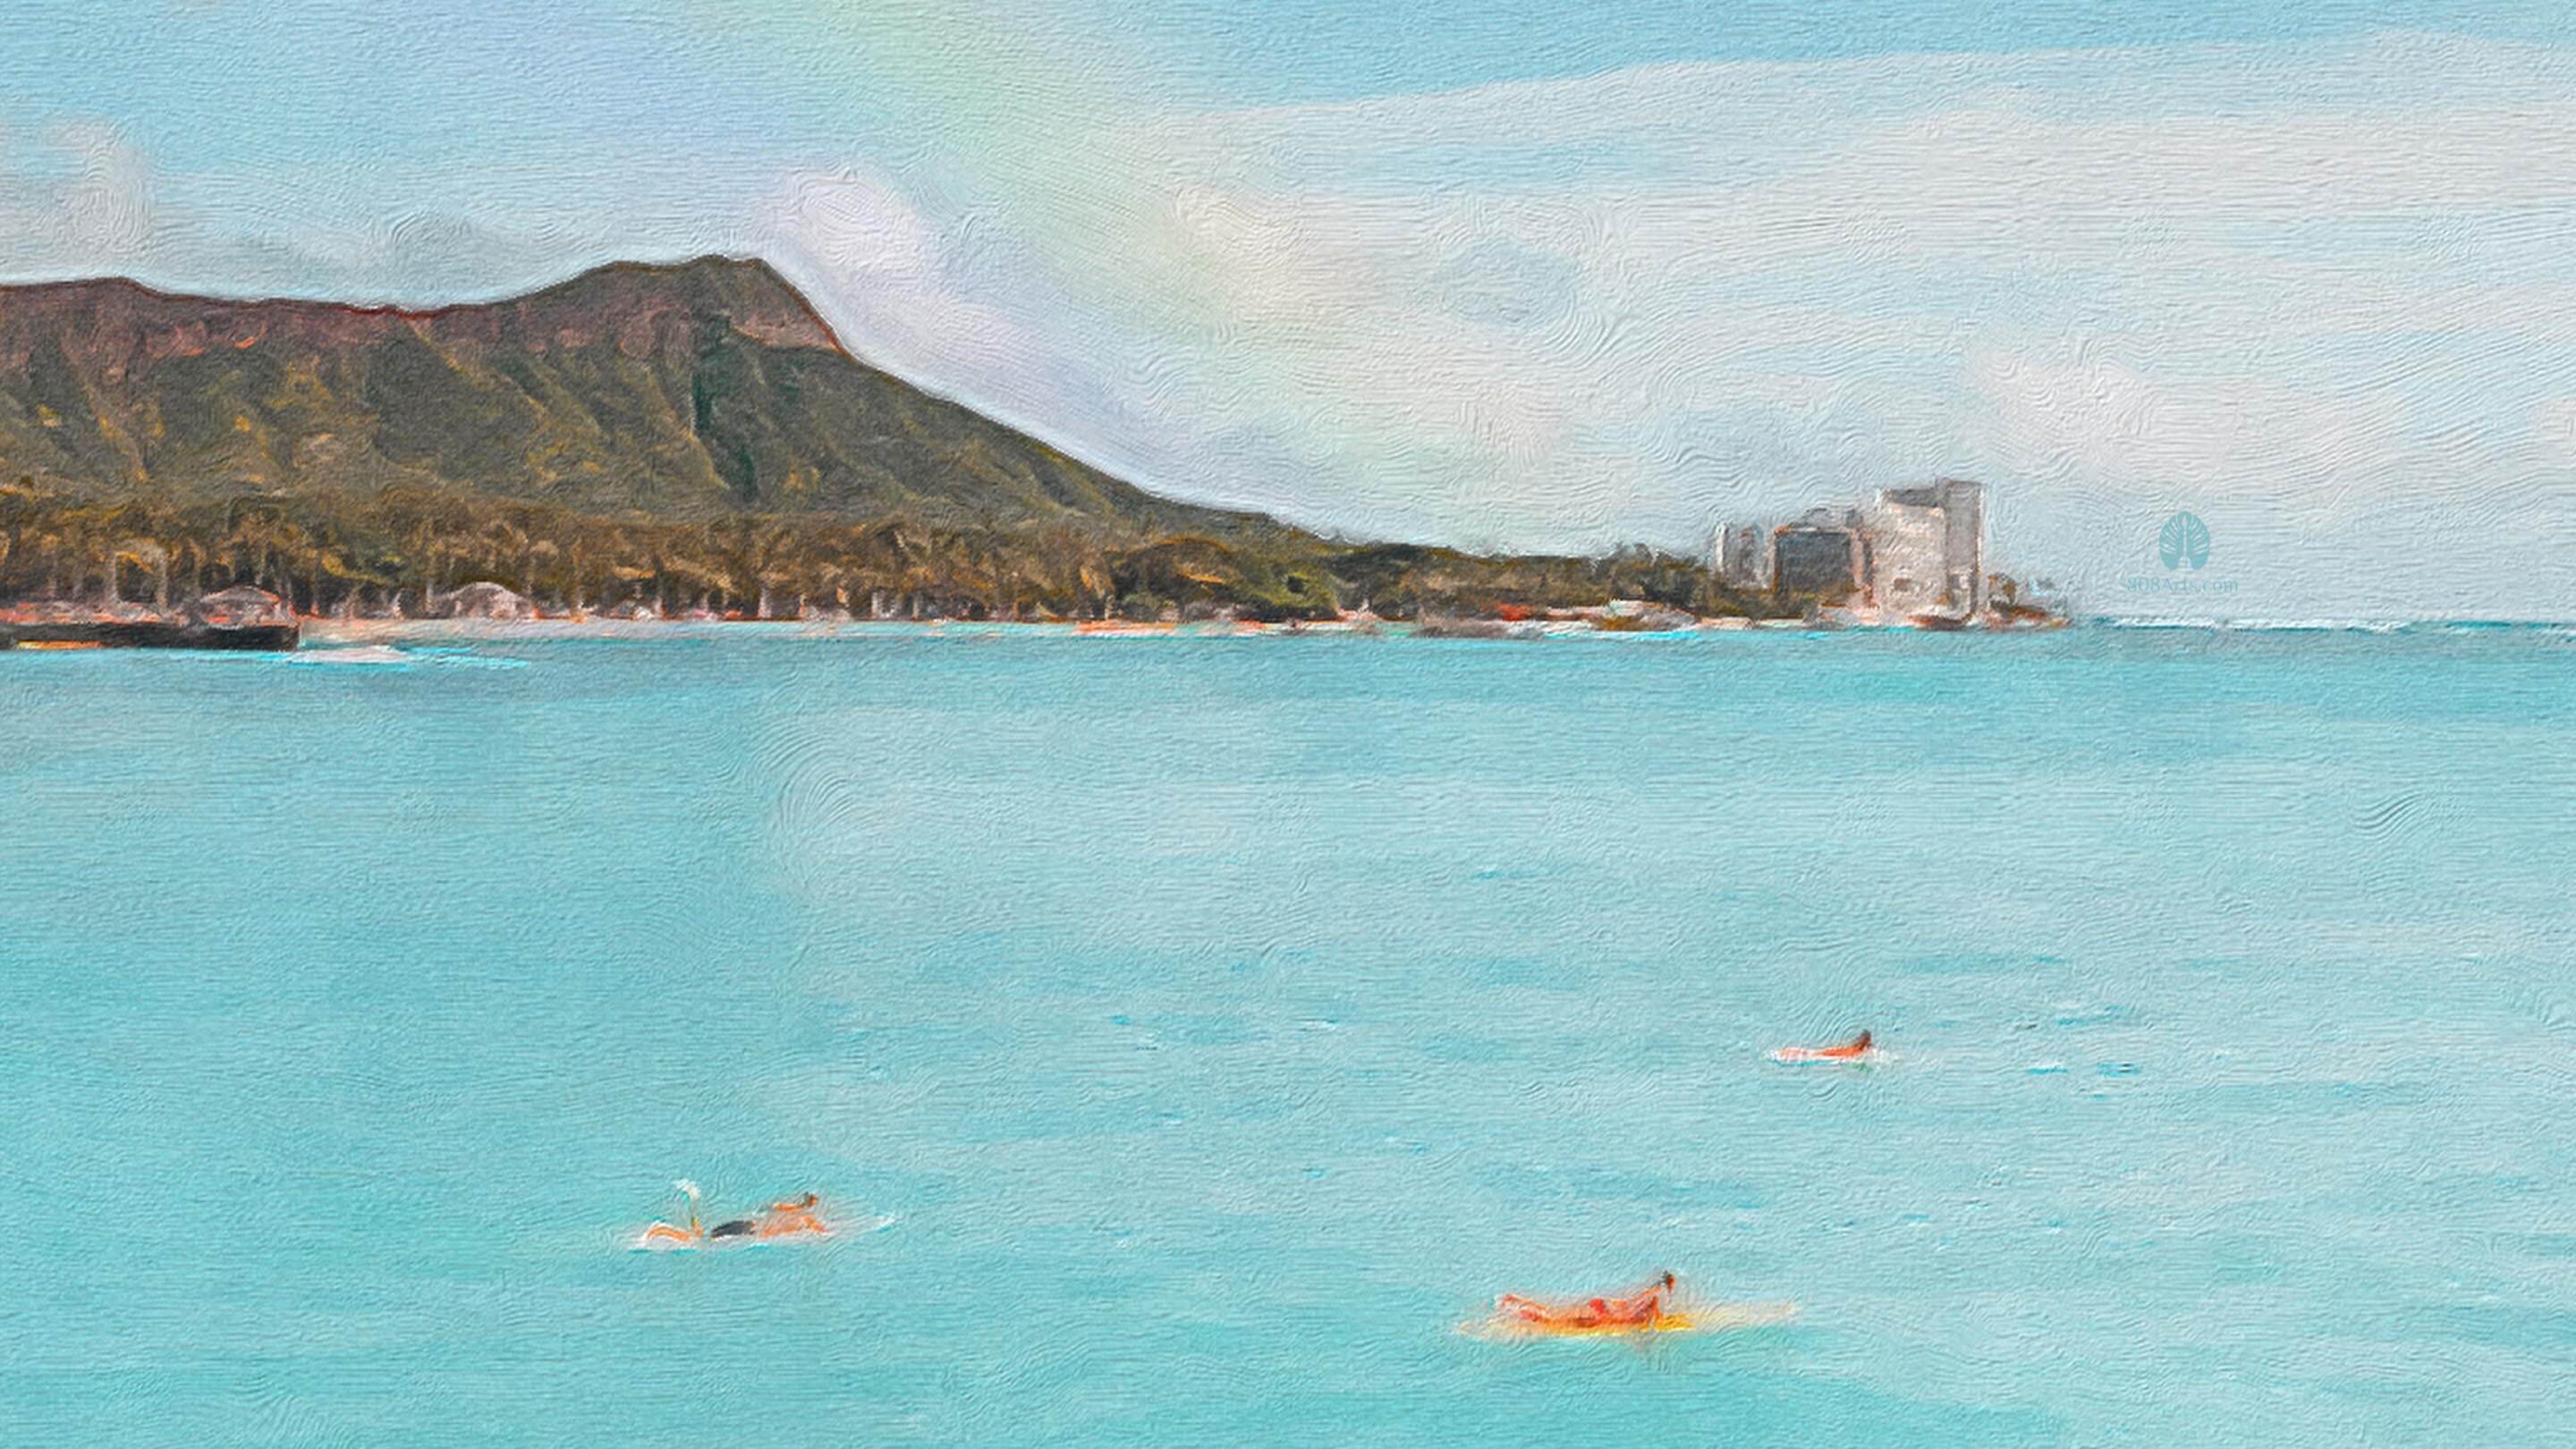 diamondhead waikiki seascape painting with surfers